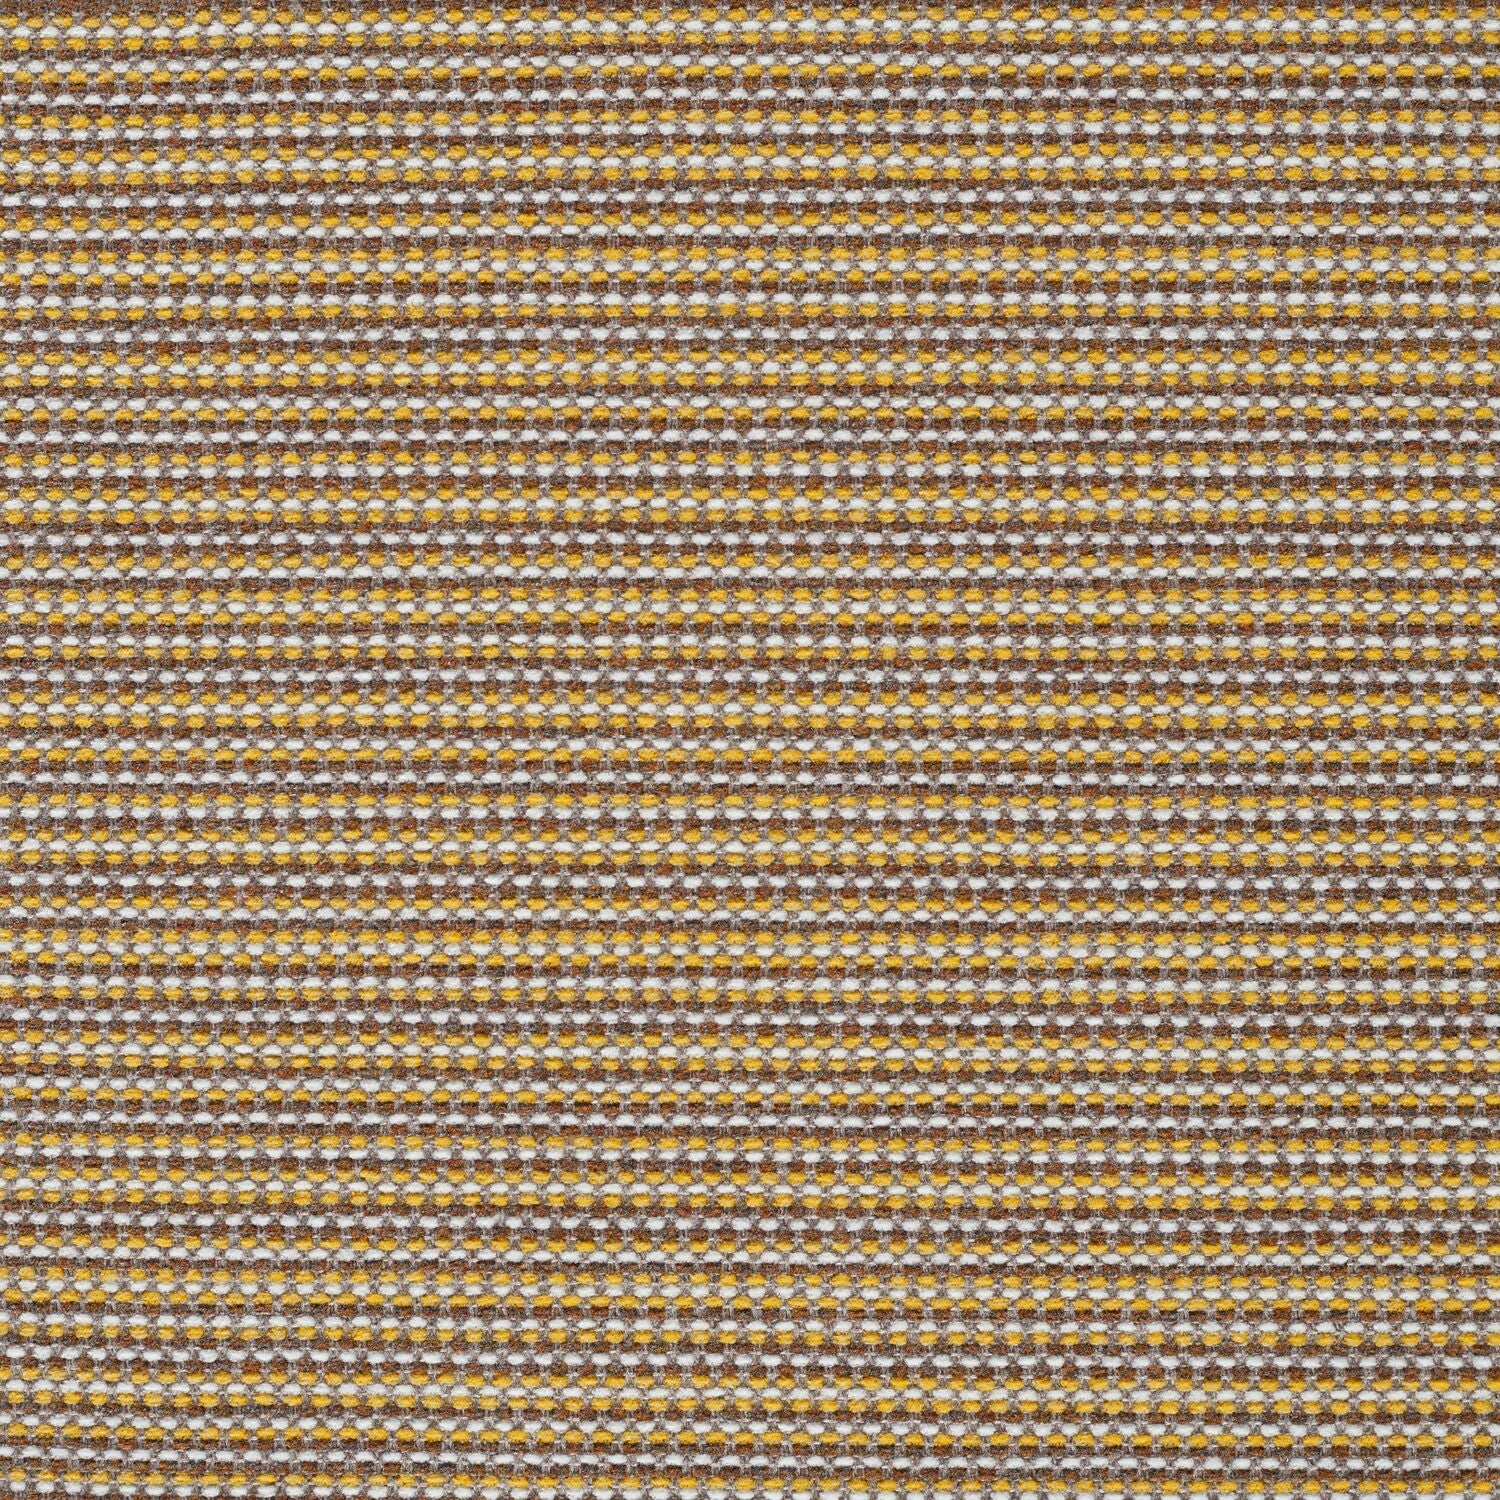 Megapixel - Honeycomb - 4097 - 05